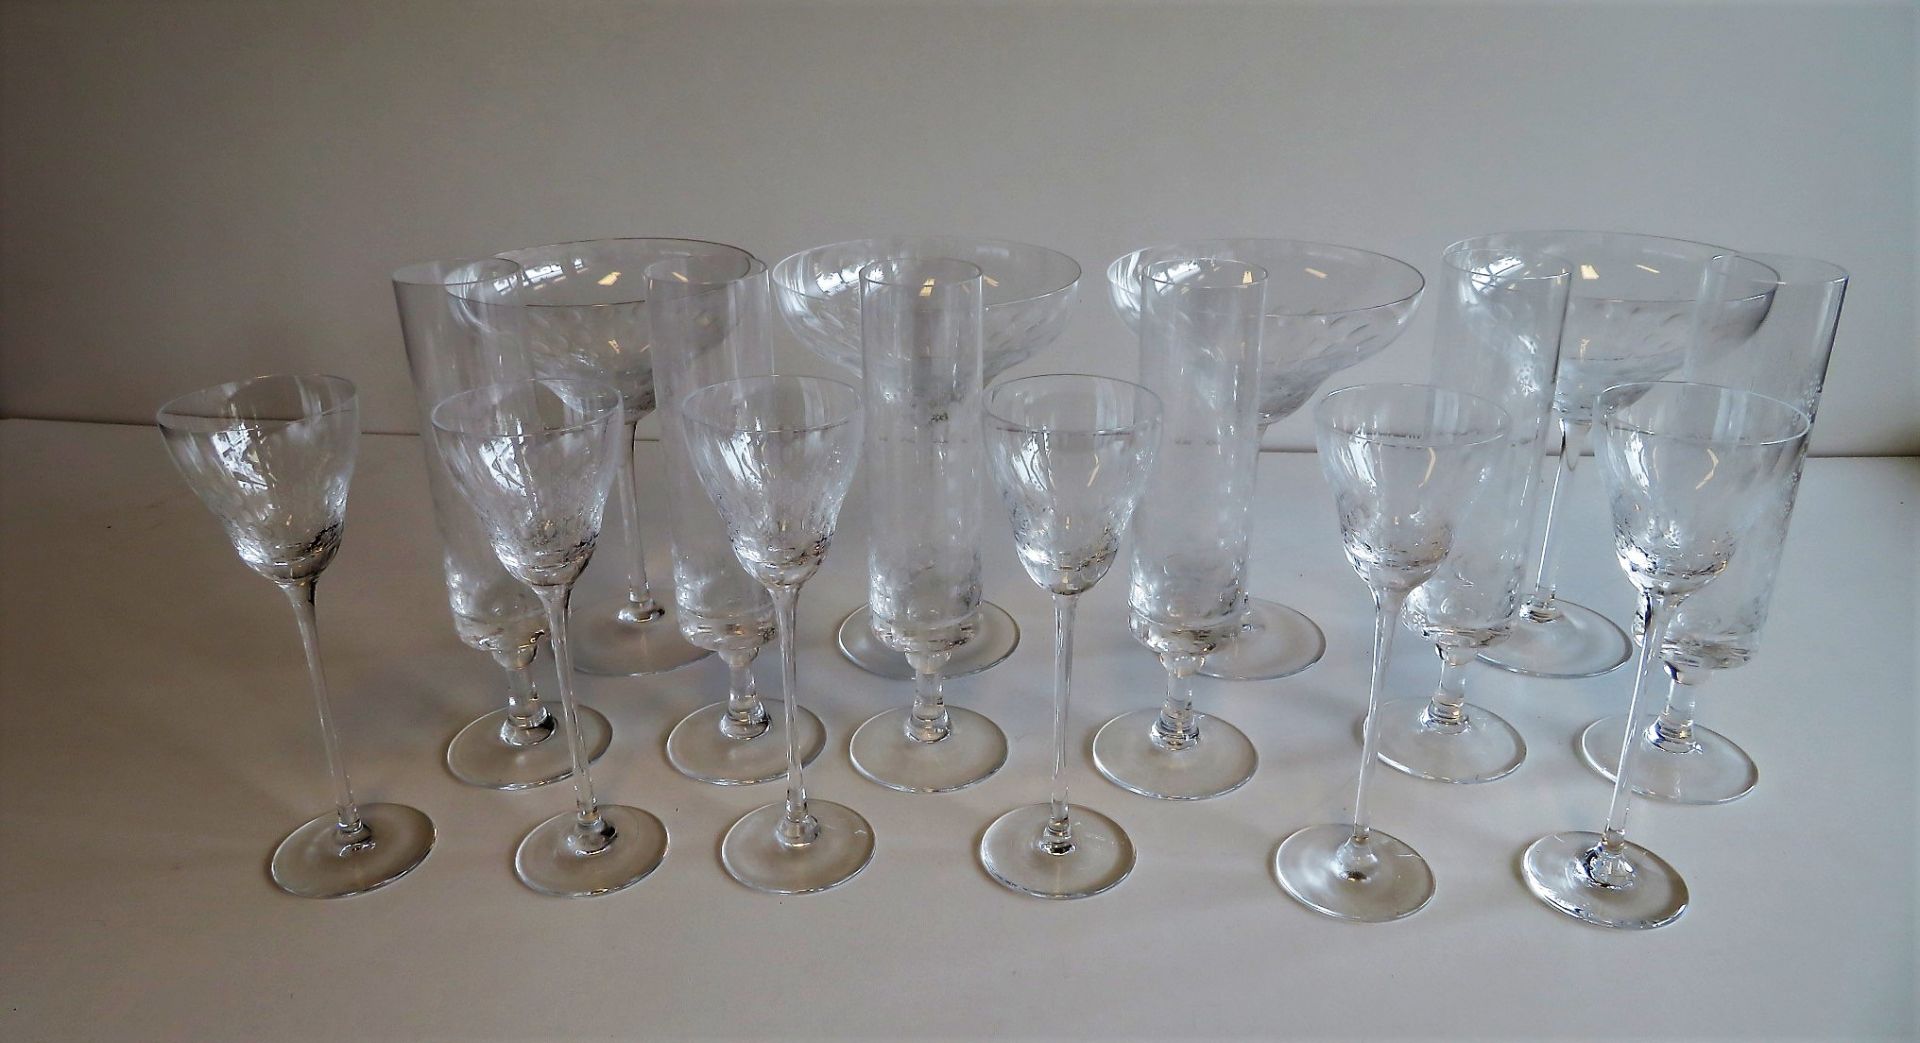 30 teiliges Glas-Set, Rosenthal, Modell Romanze, Björn Wiinblad (1918 - 2006), farbloses - Bild 2 aus 2